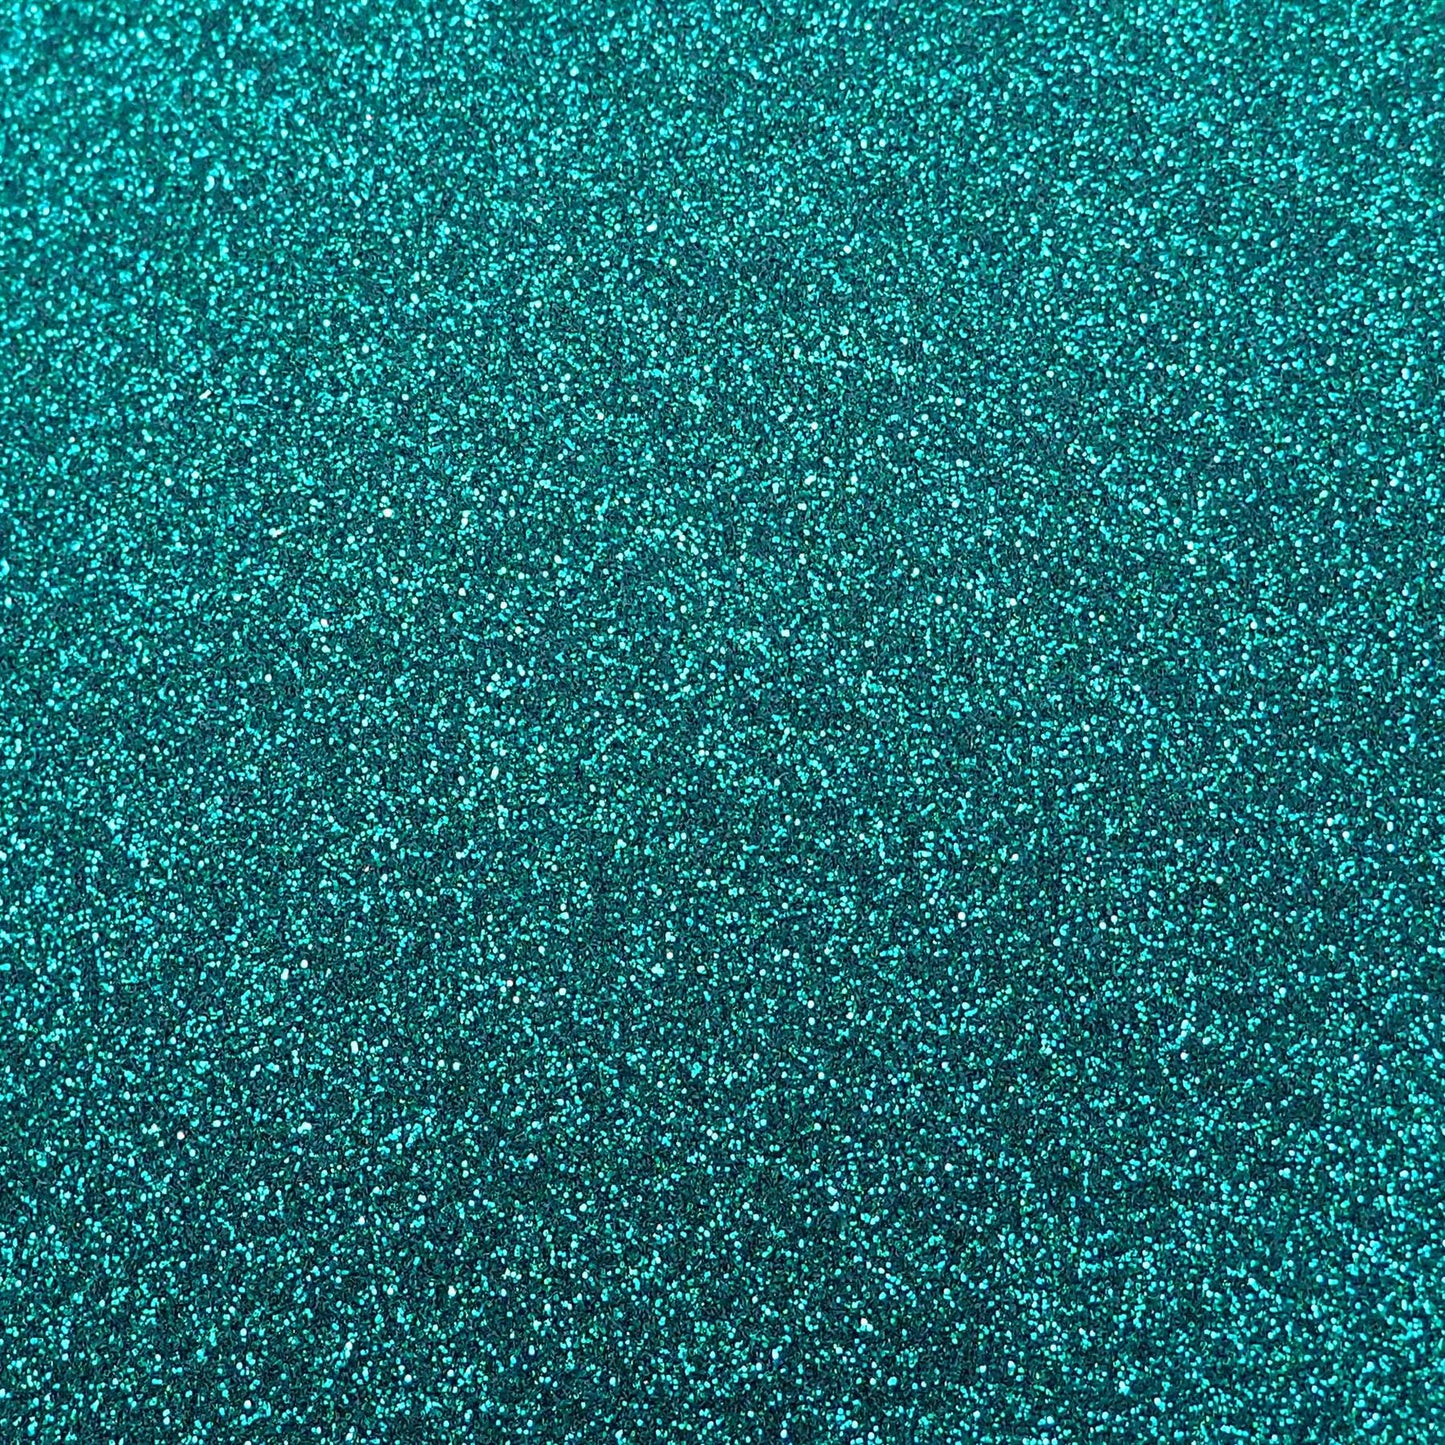 dartfords Turquoise Green Glitter Flake 100g 0.008